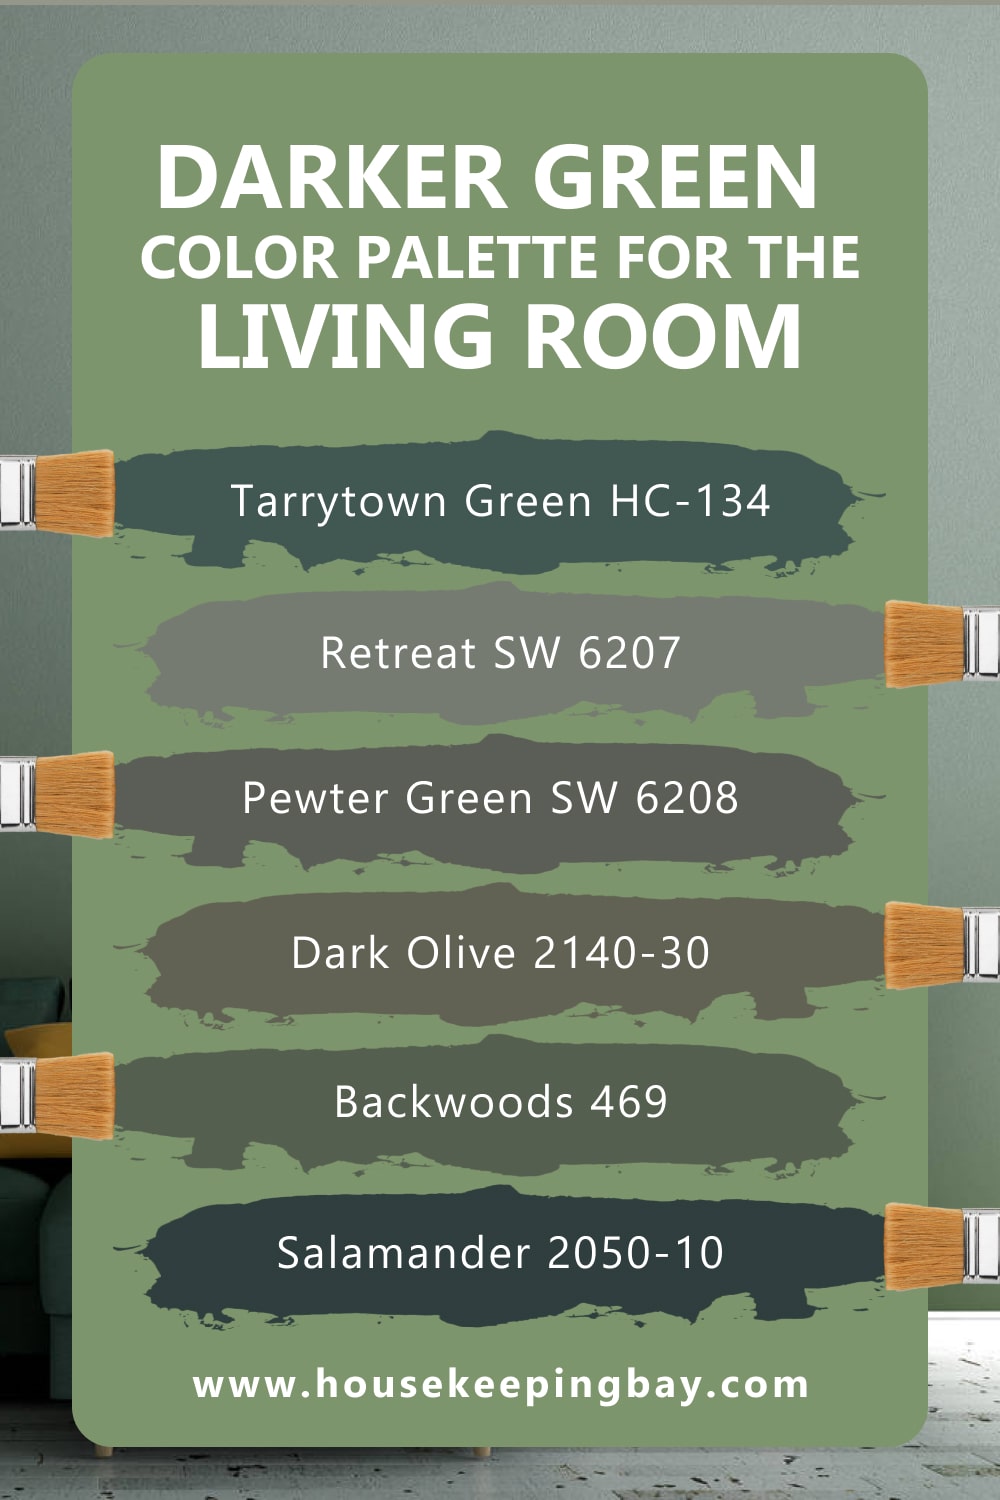 Darker Green Color Palette in the Living Room